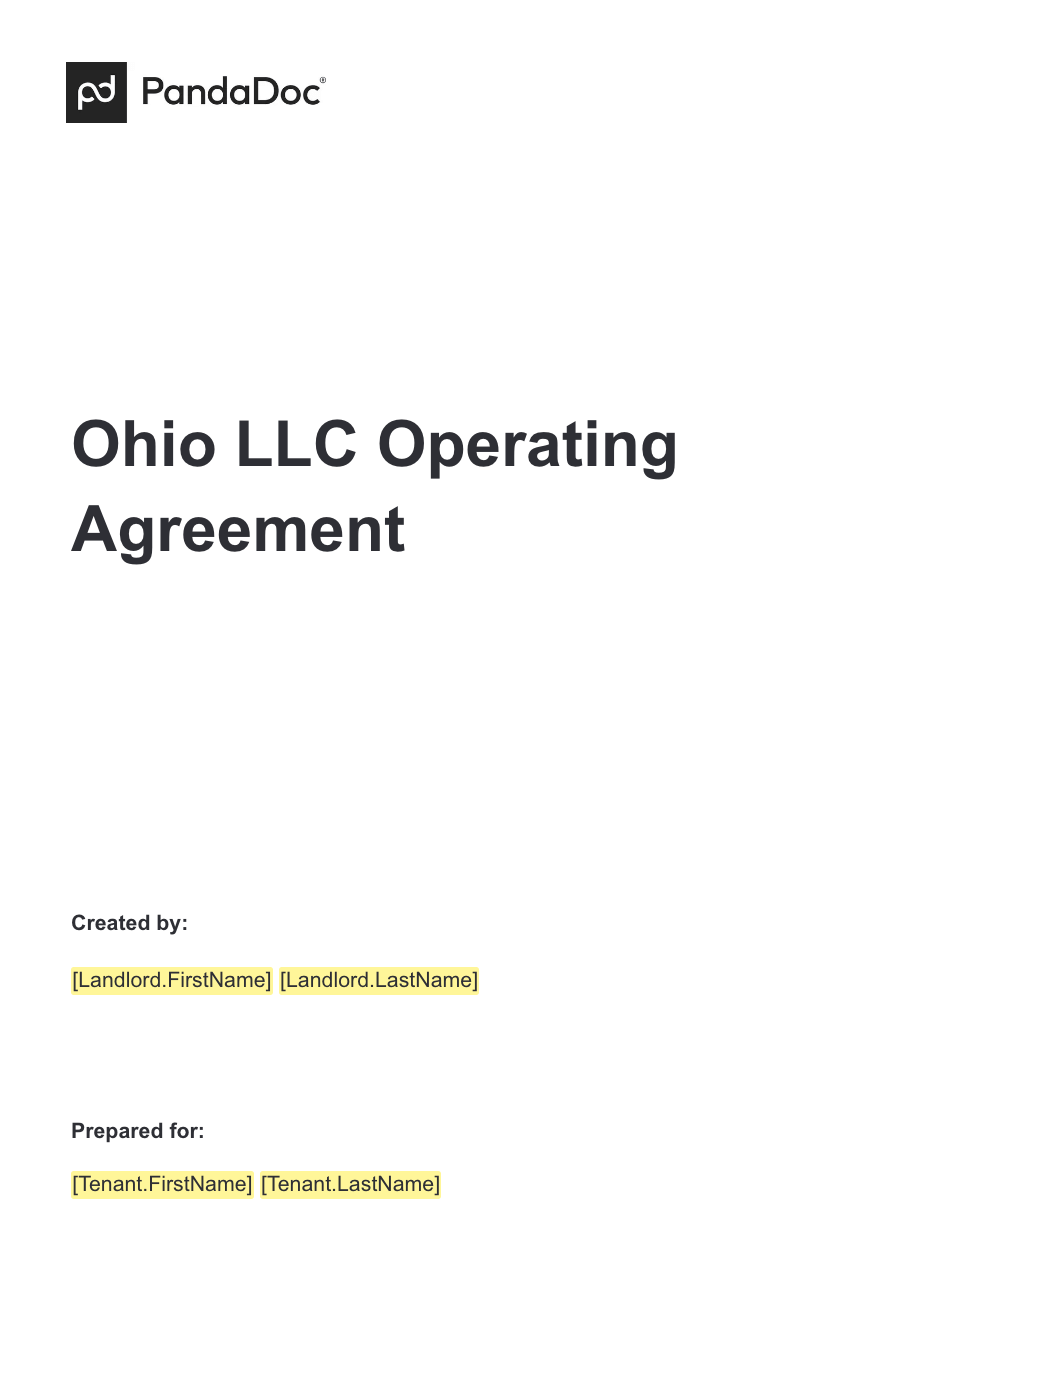 Ohio LLC Operating Agreement 